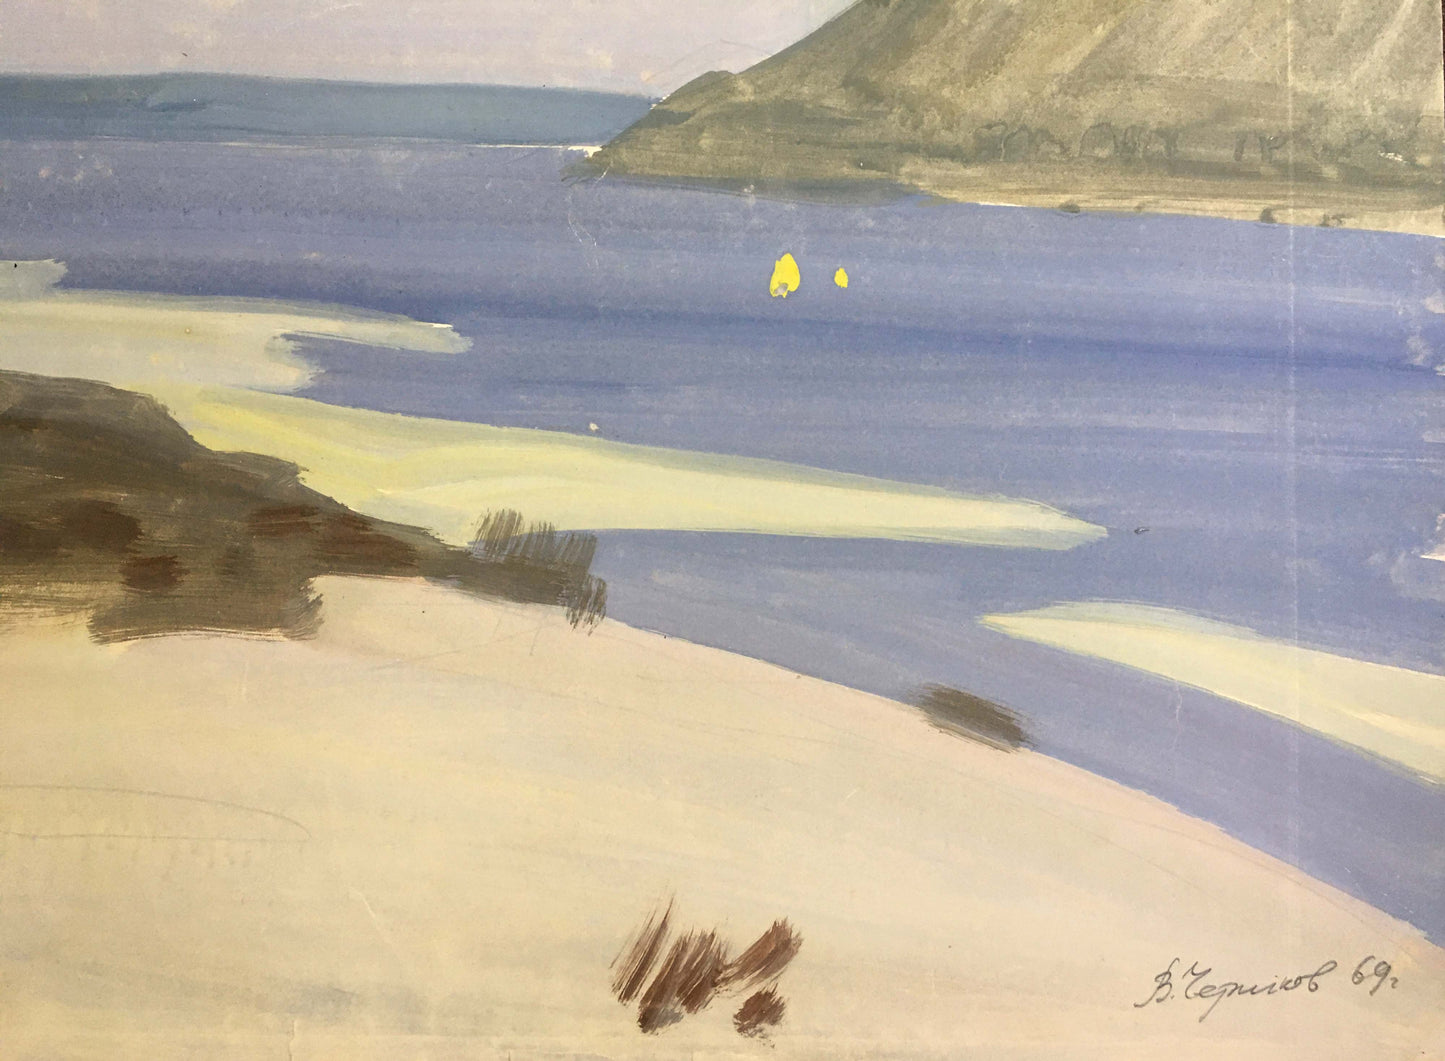 Coastal Reverie: Vladimir Chernikov's Gouache Interpretation, "On the Shore"